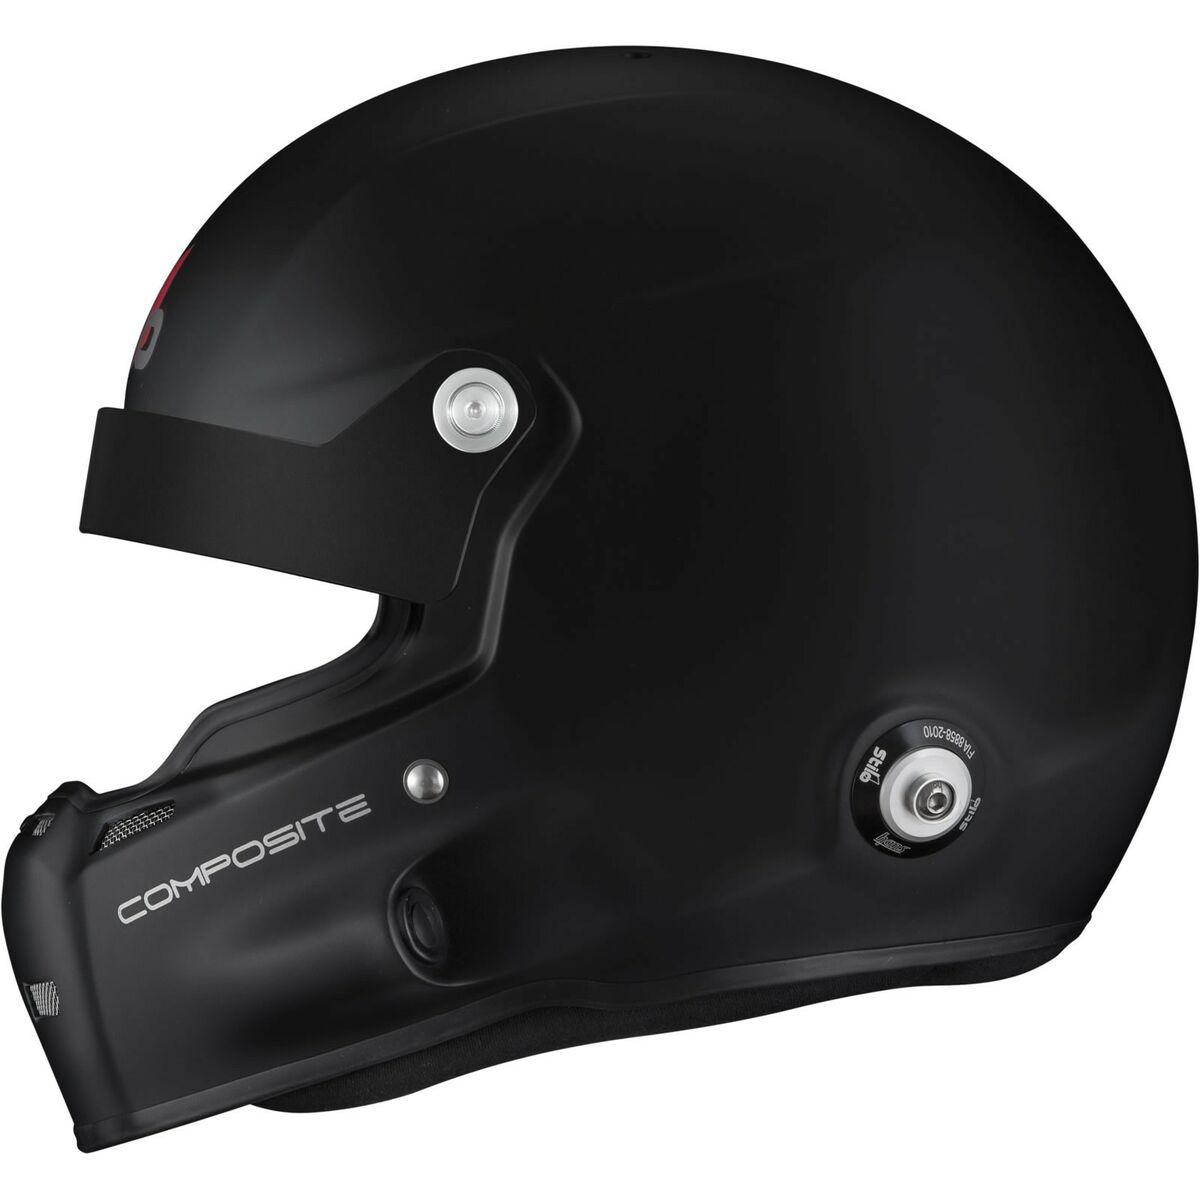 Полный шлем Stilo ST5 R RALLY SNELL SA2020 Чёрный 59